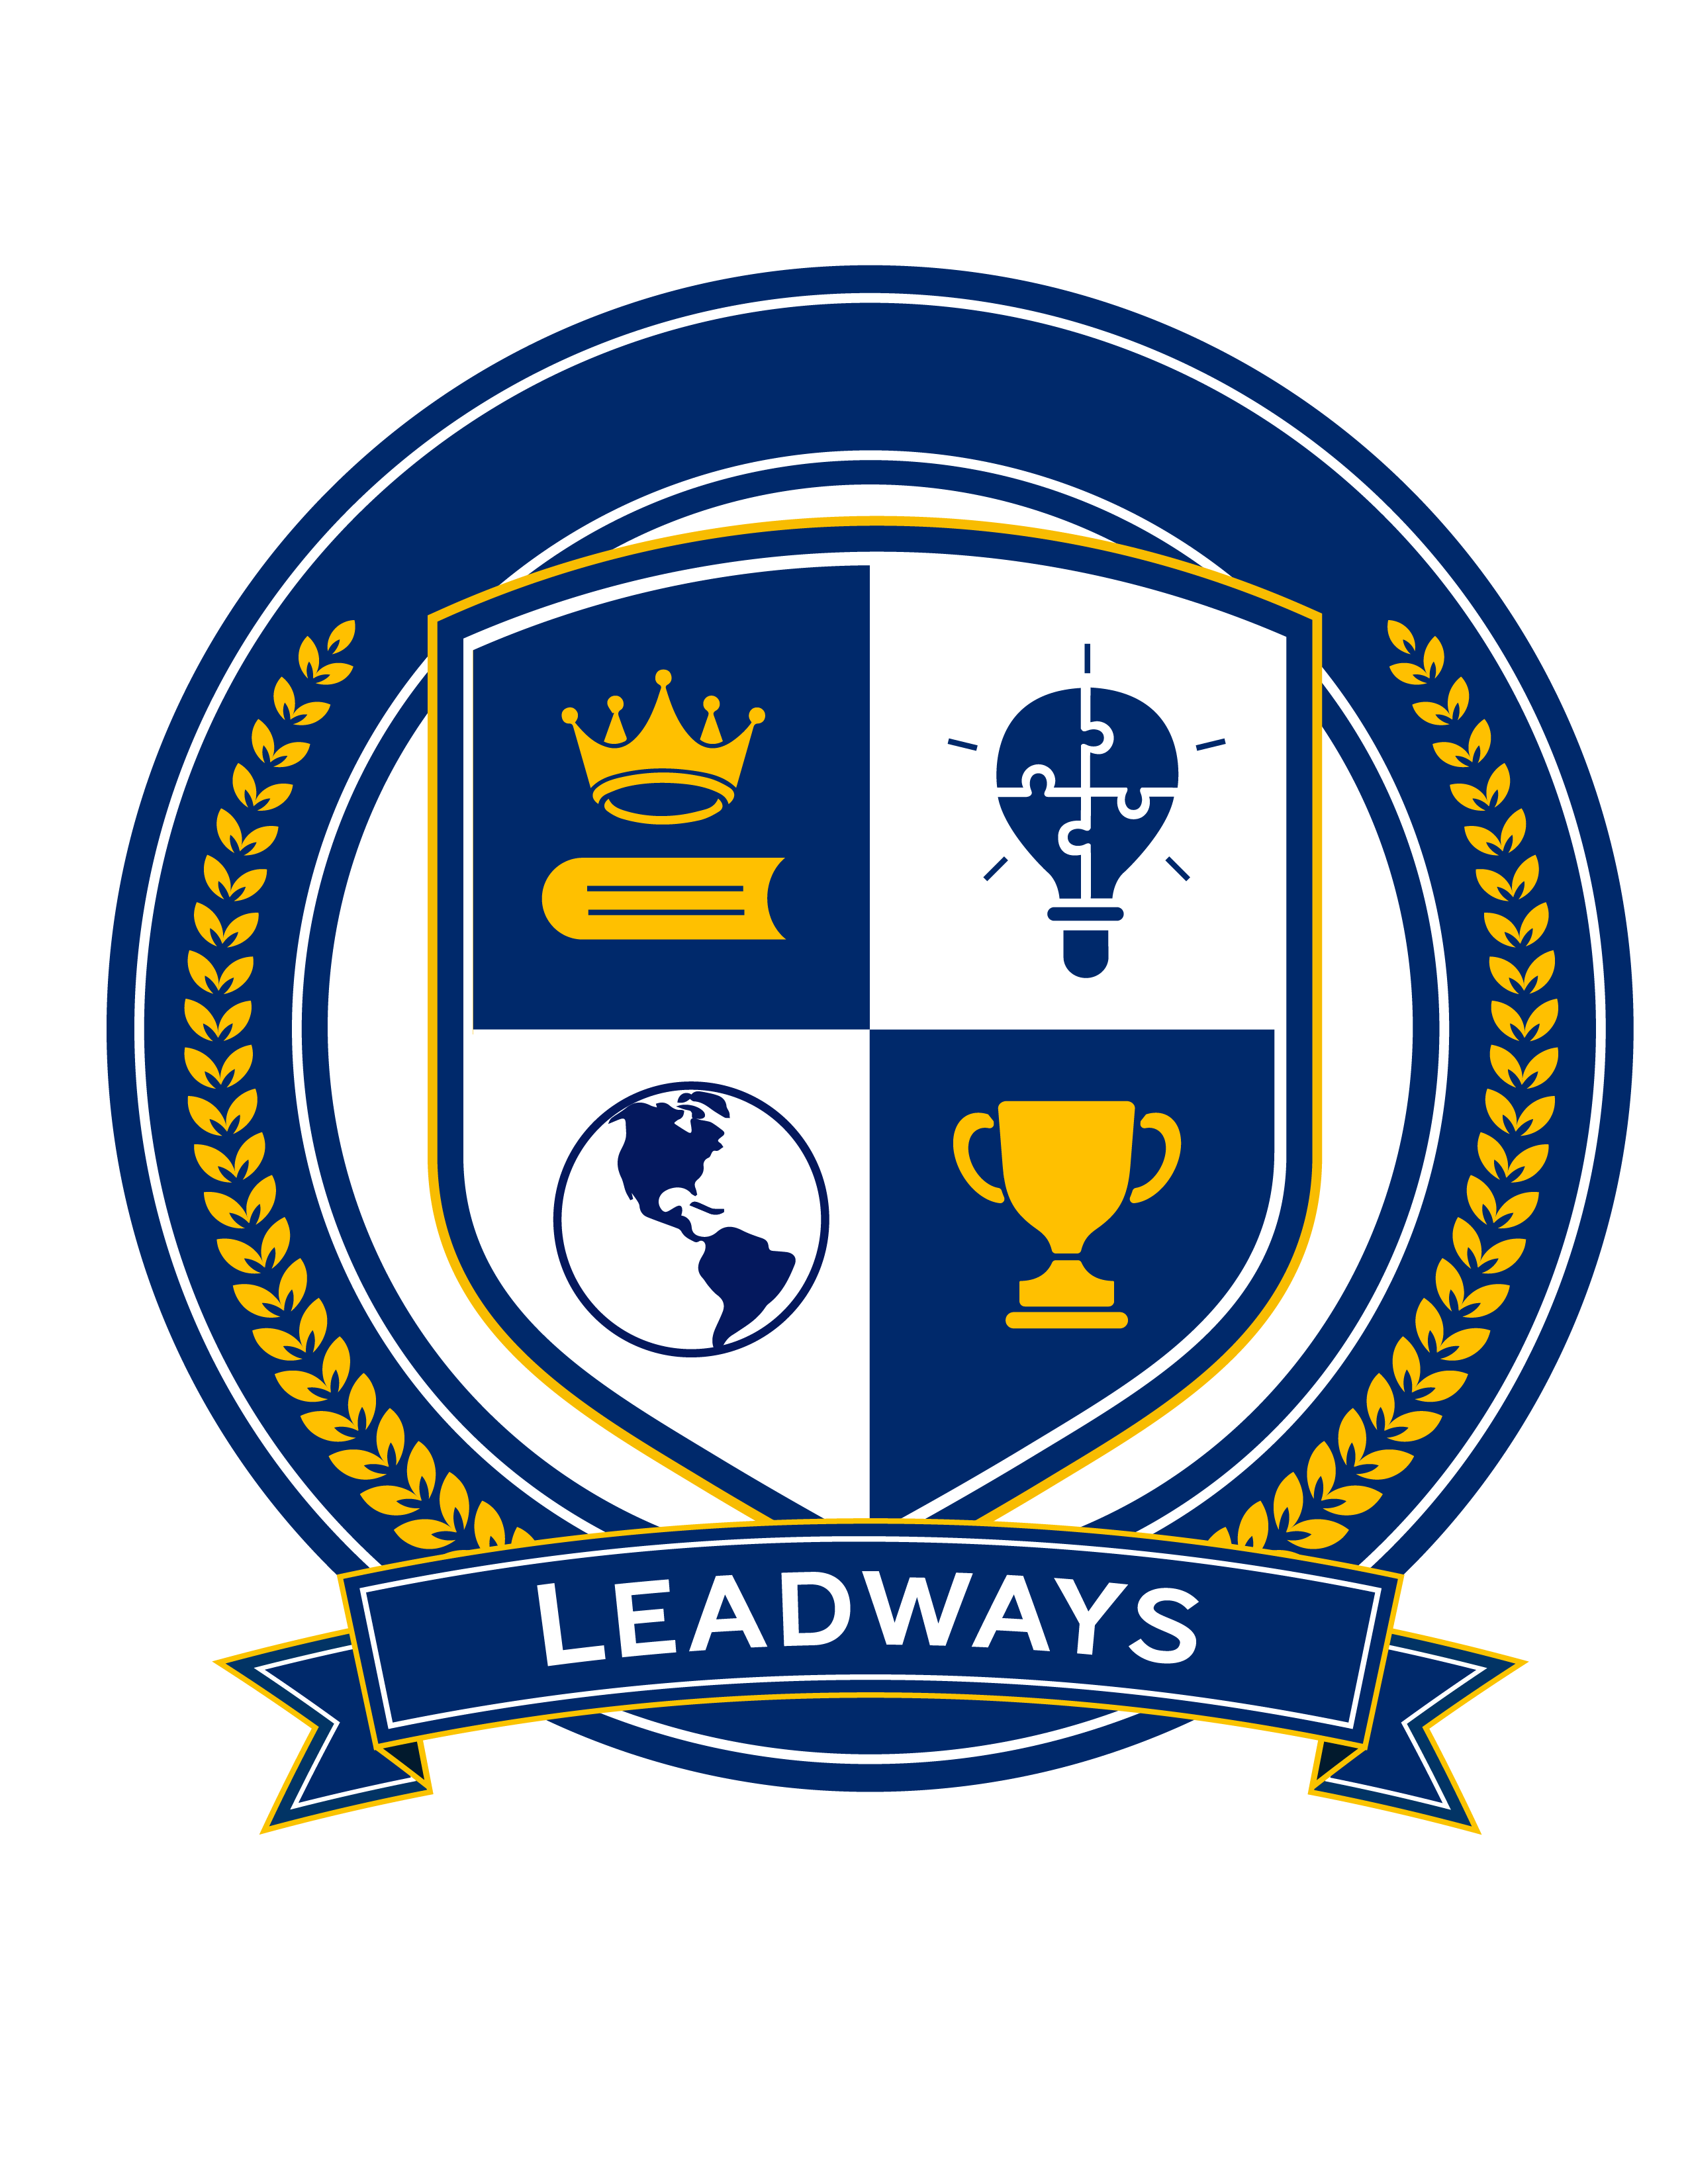 Logo for Leadways School in Cupertino California